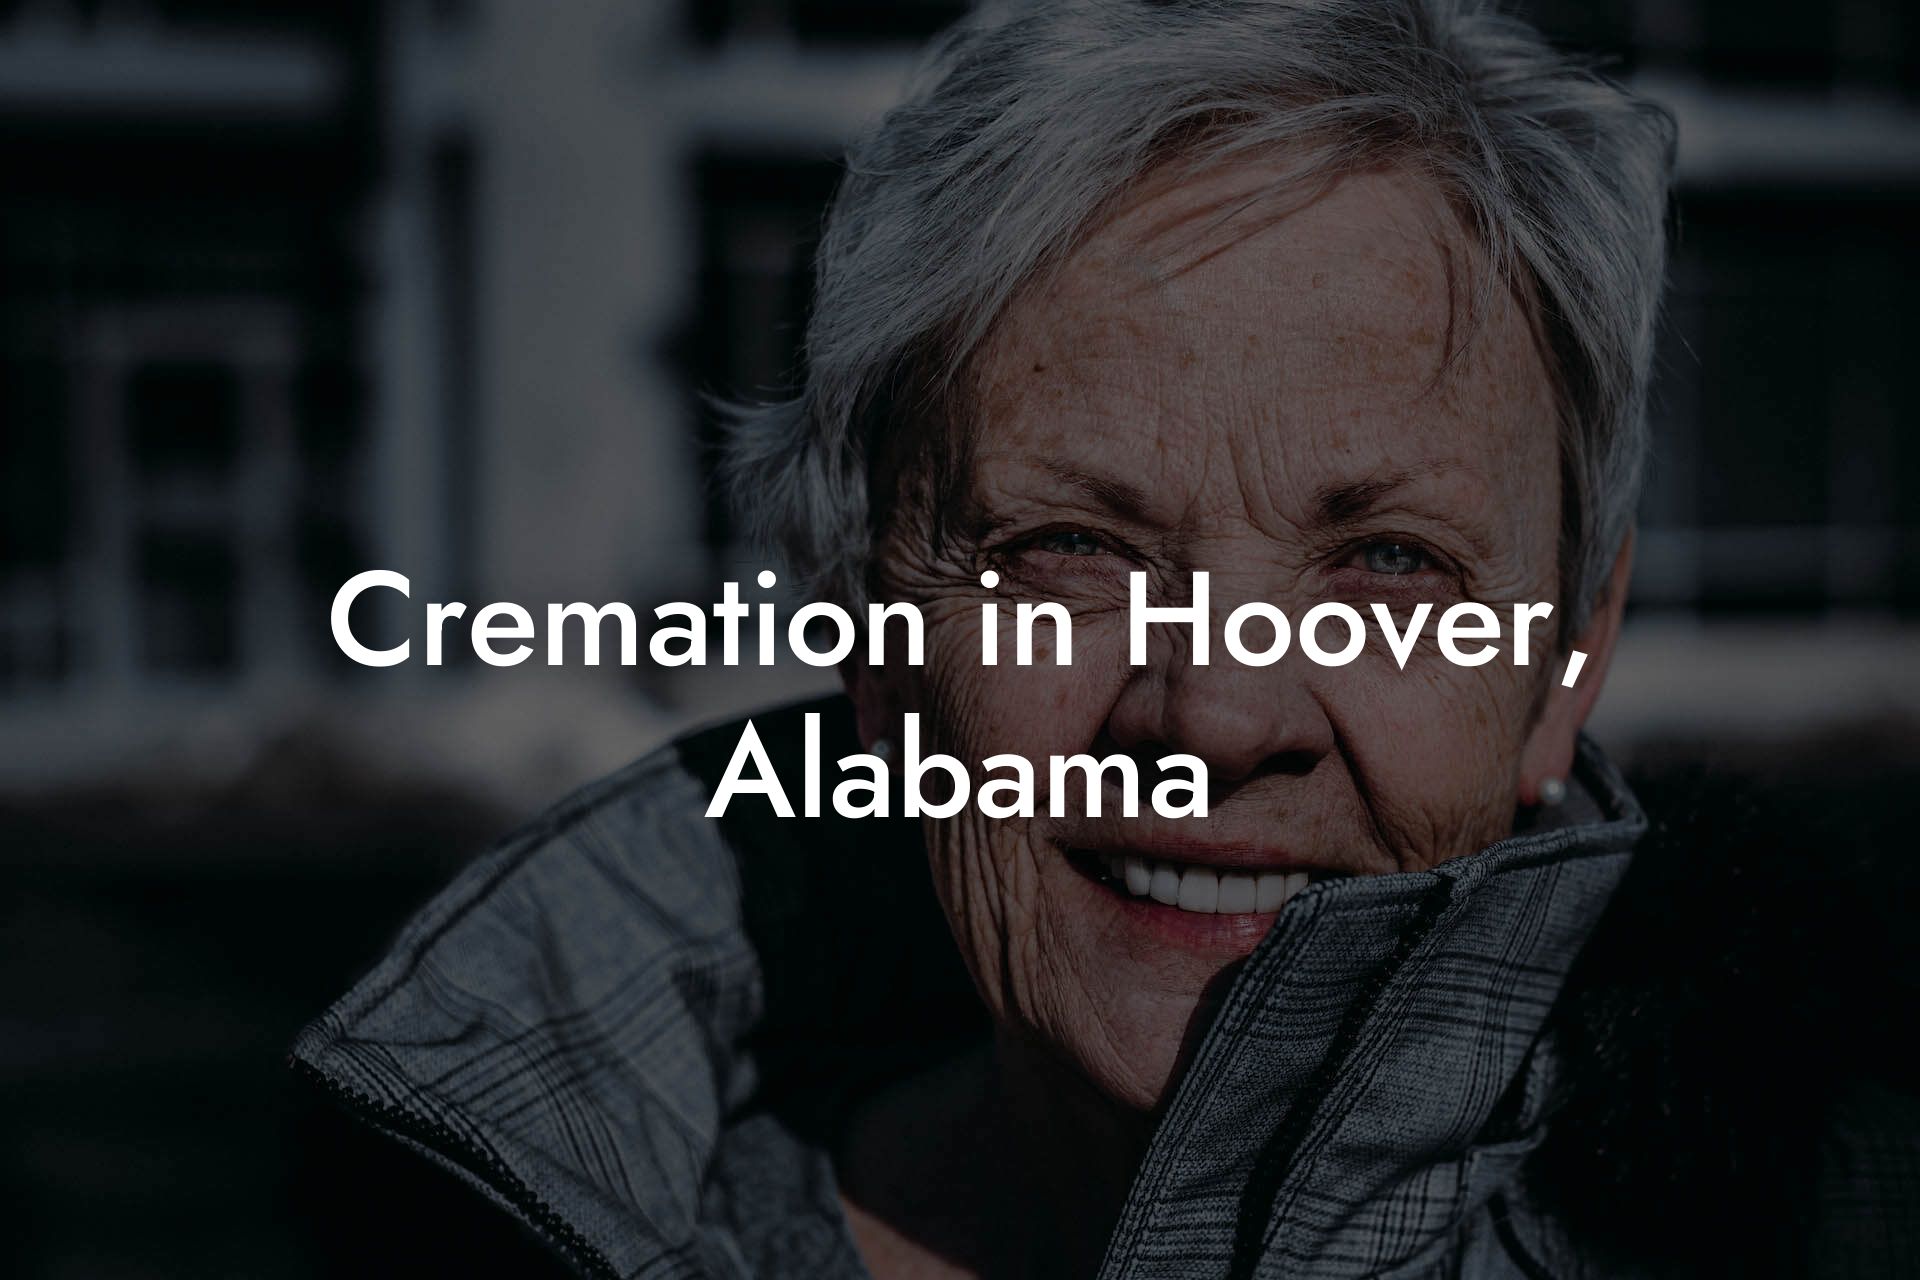 Cremation in Hoover, Alabama